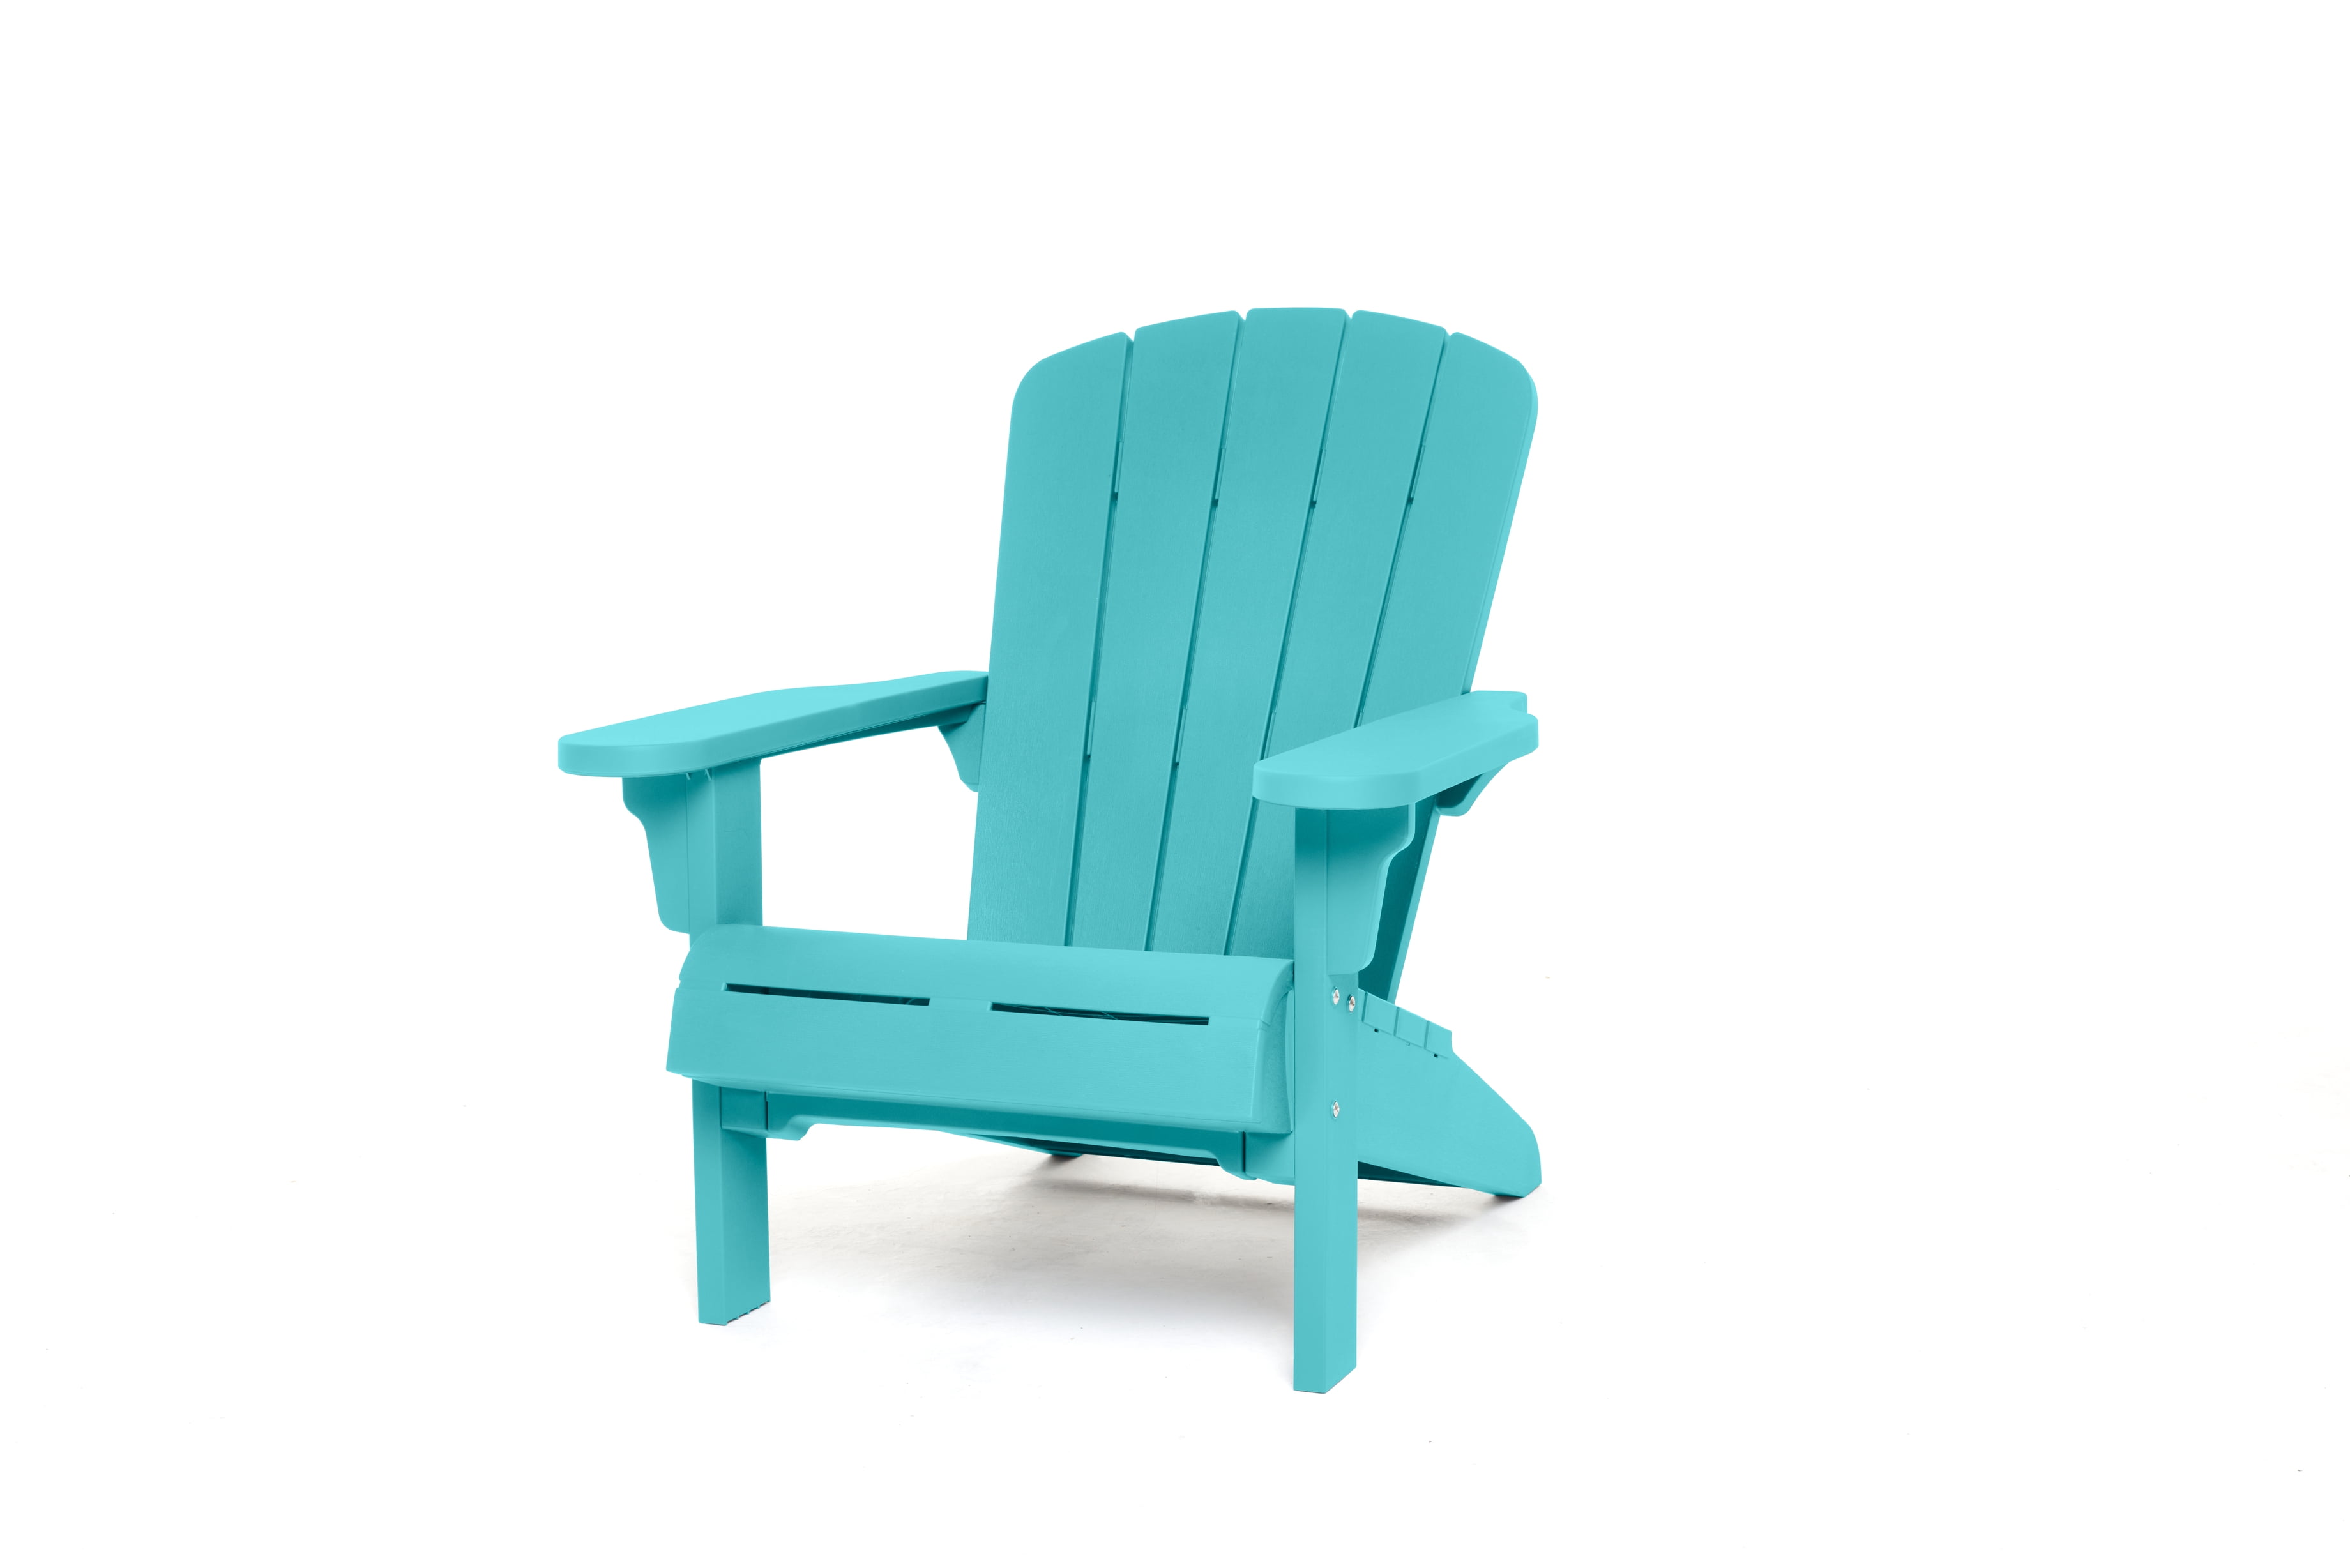 Keter Adirondack Chair, Resin Outdoor Furniture, Teal